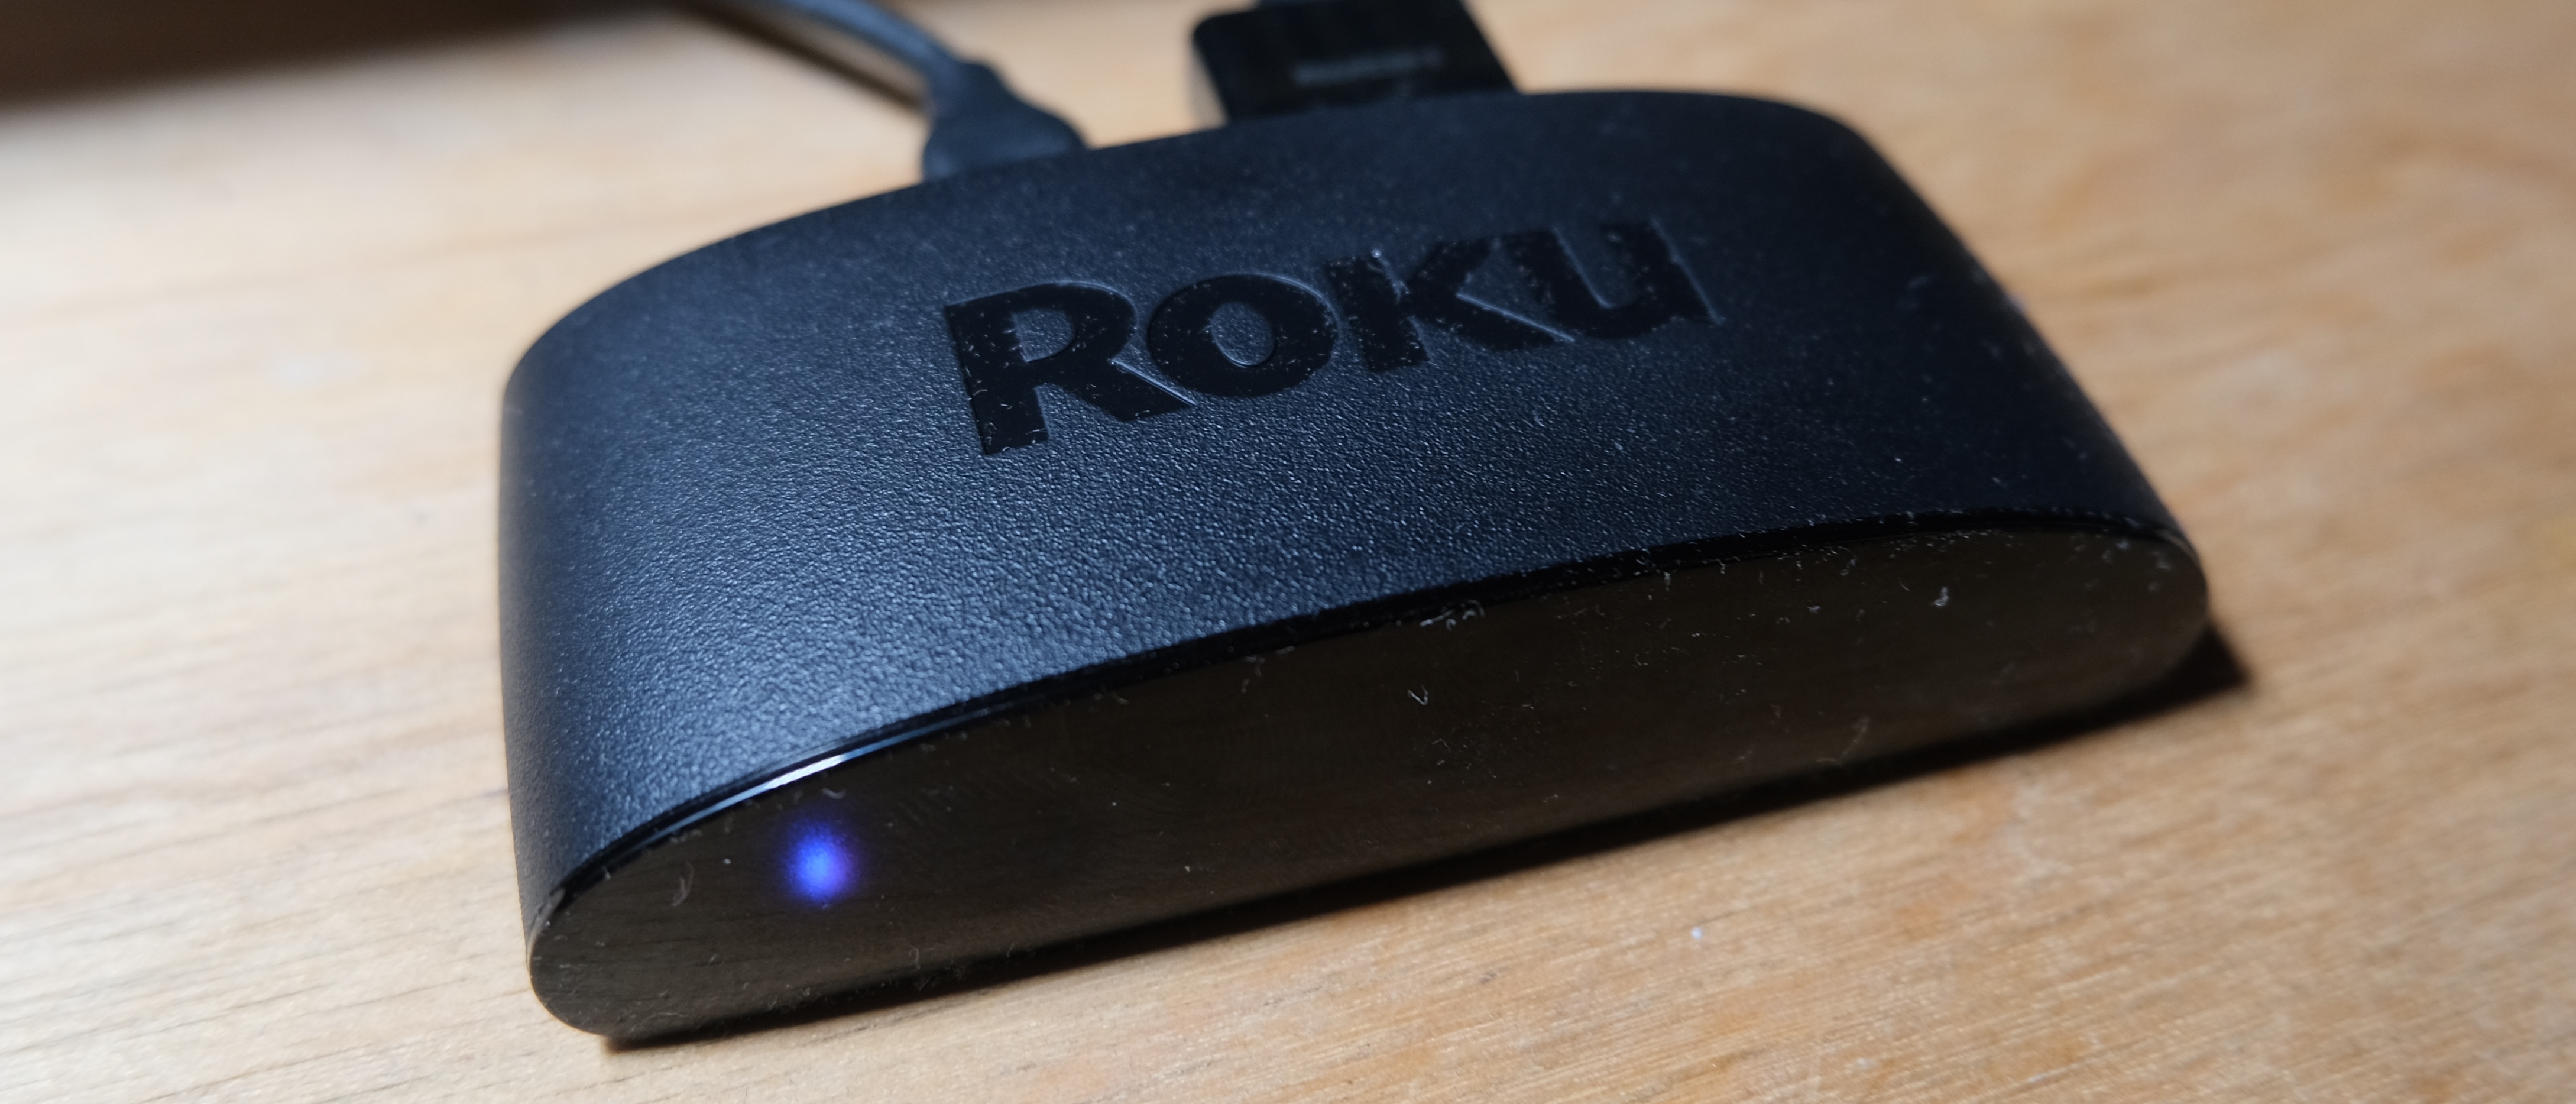 Roku Express 4K, 4K streaming Device